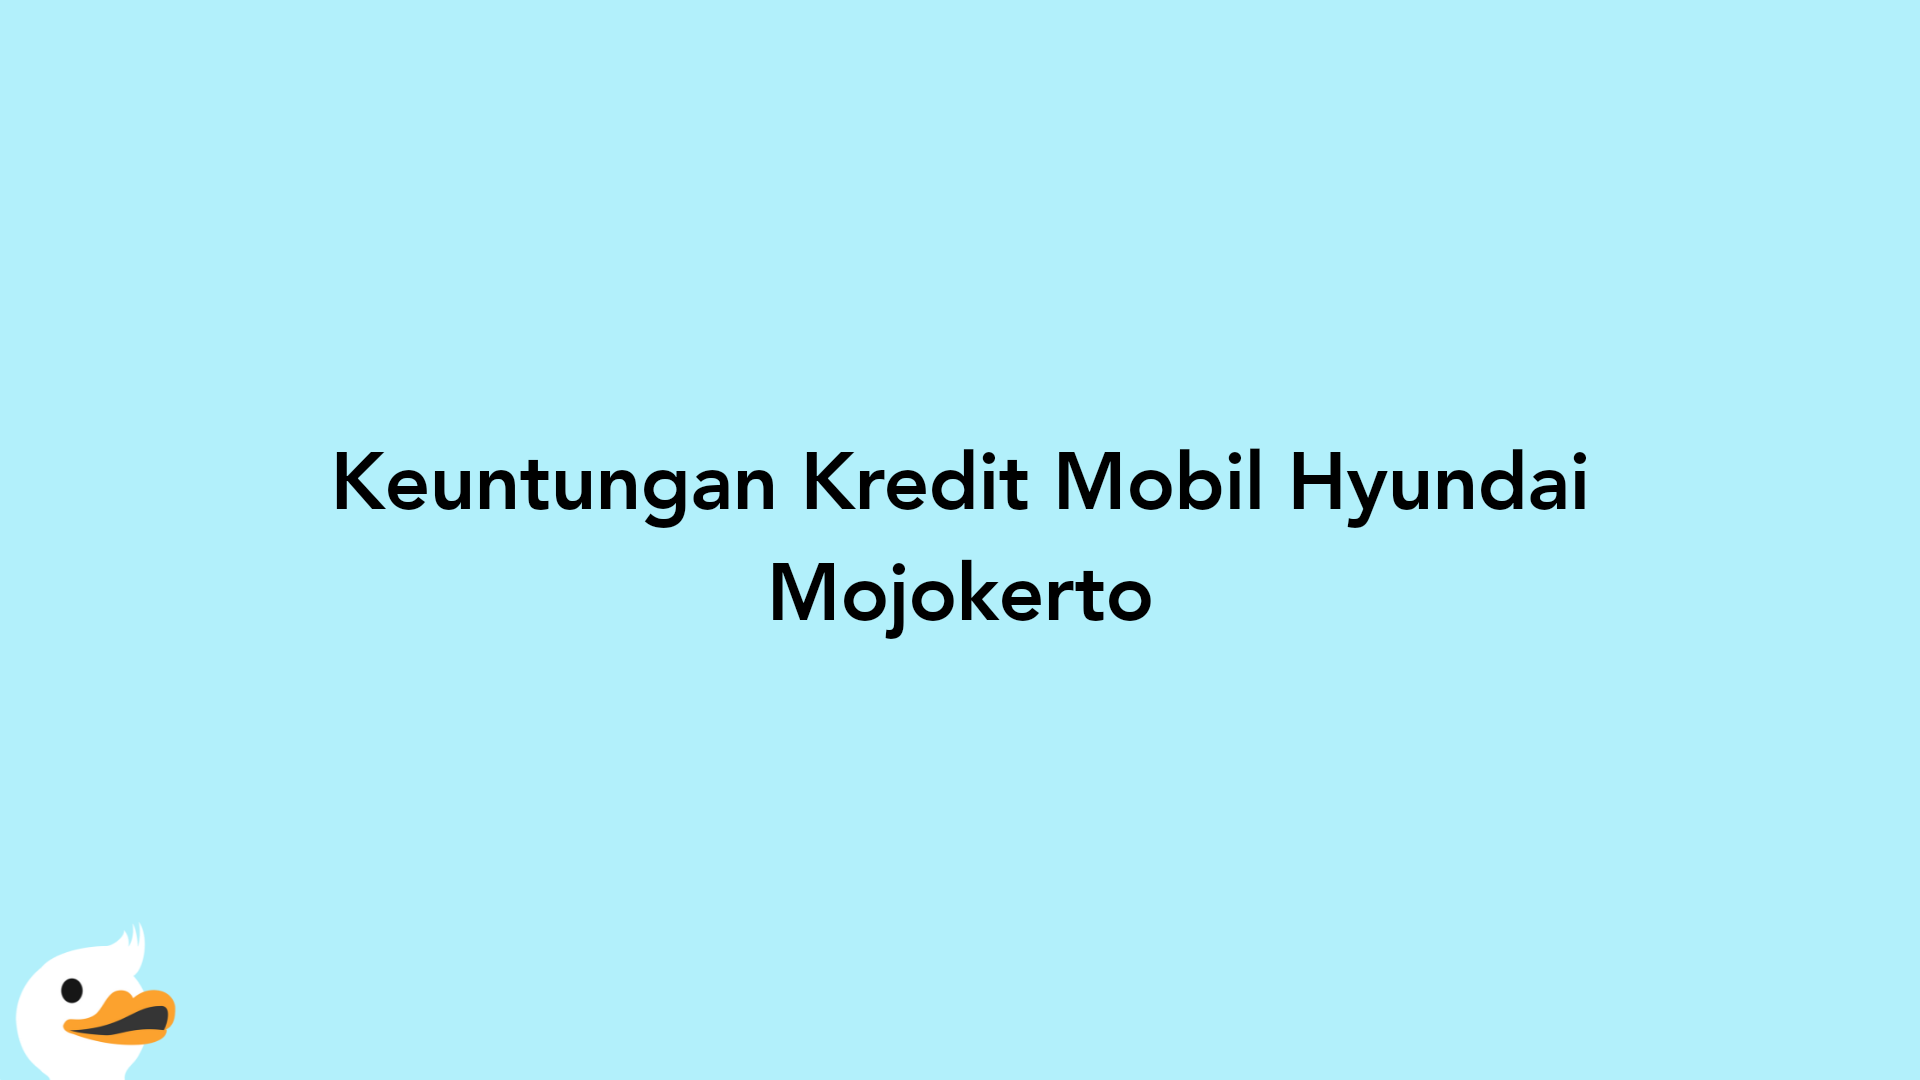 Keuntungan Kredit Mobil Hyundai Mojokerto